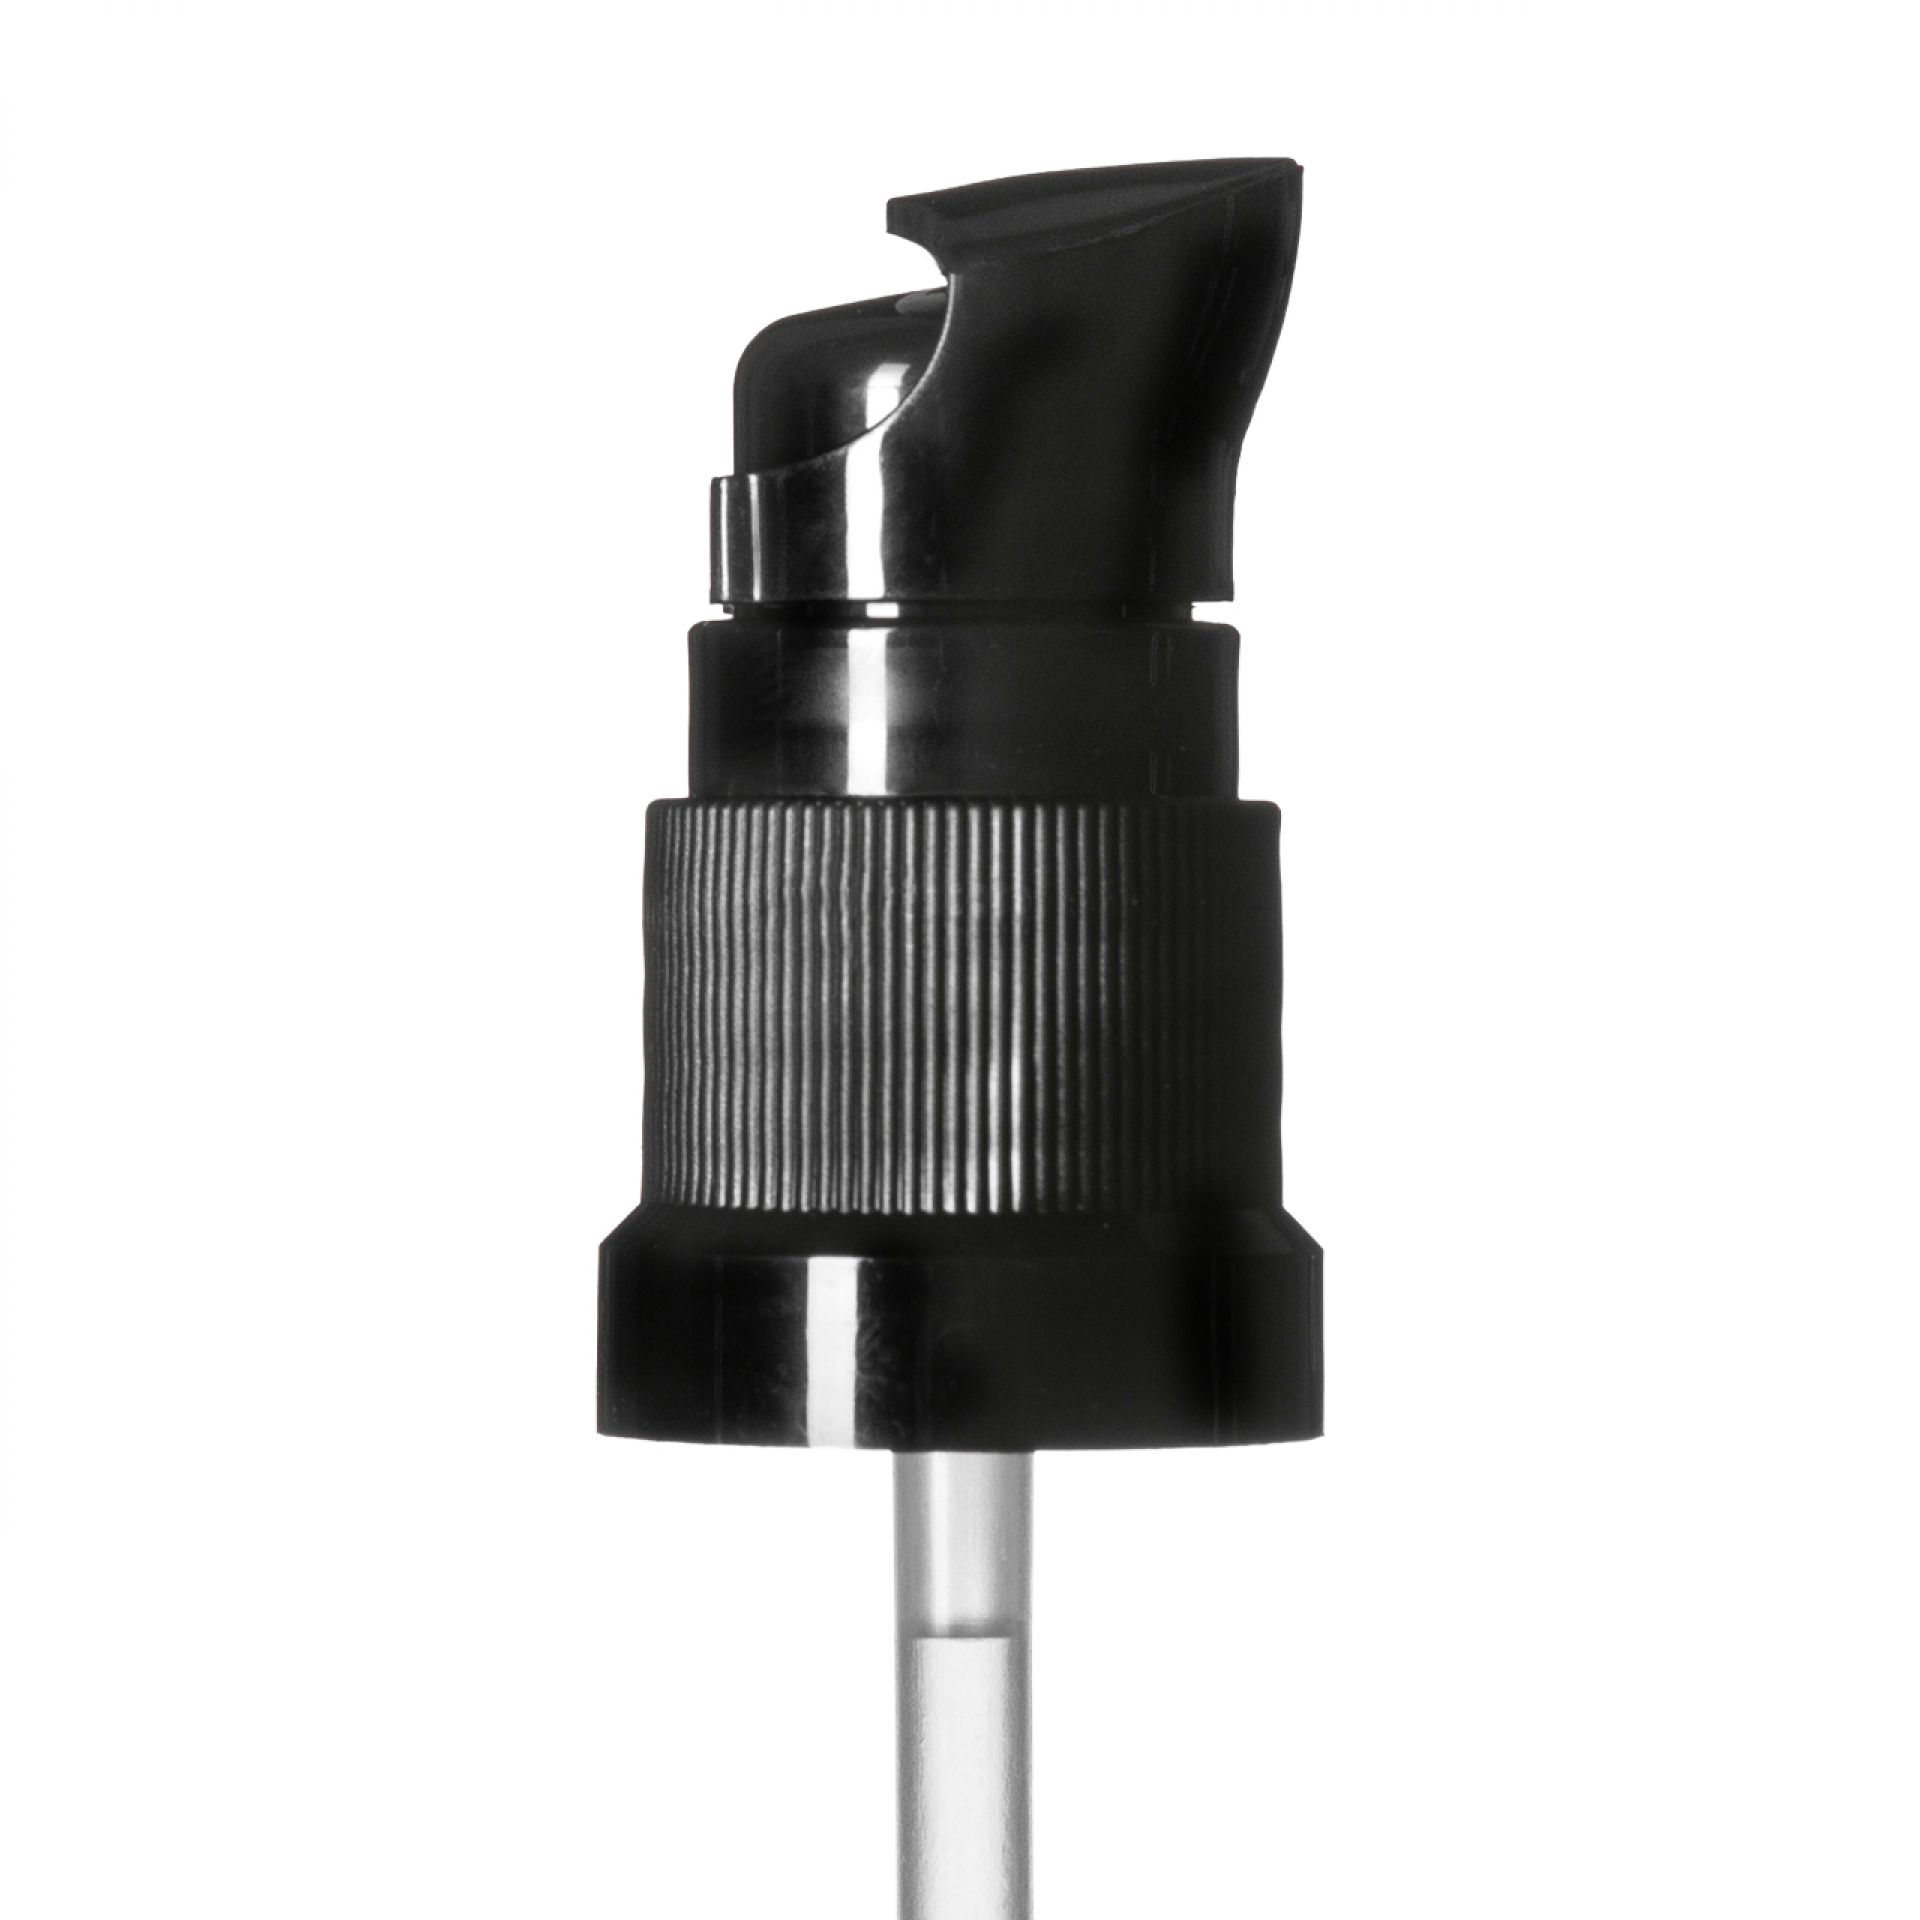 Lotion pump Metropolitan DIN18, PP, black, dose 0.14ml, black security clip (Orion 60)